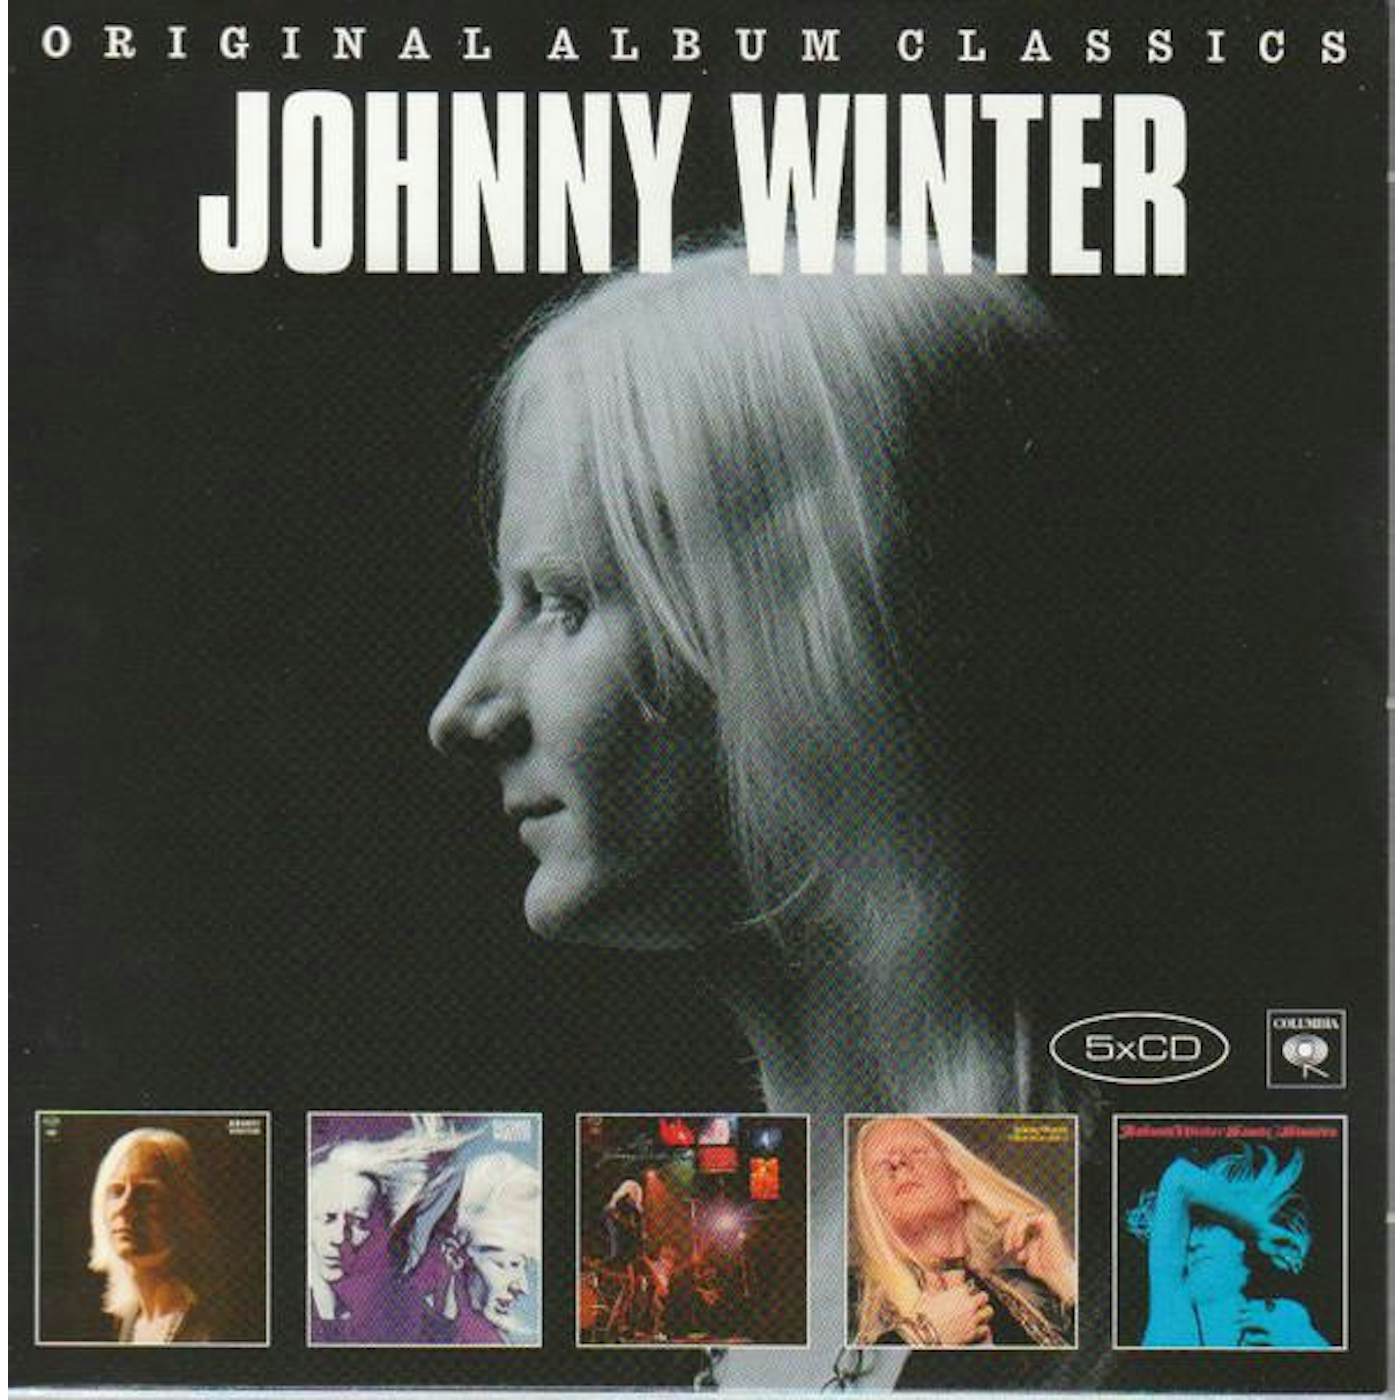 Johnny Winter ORIGINAL ALBUM CLASSICS CD